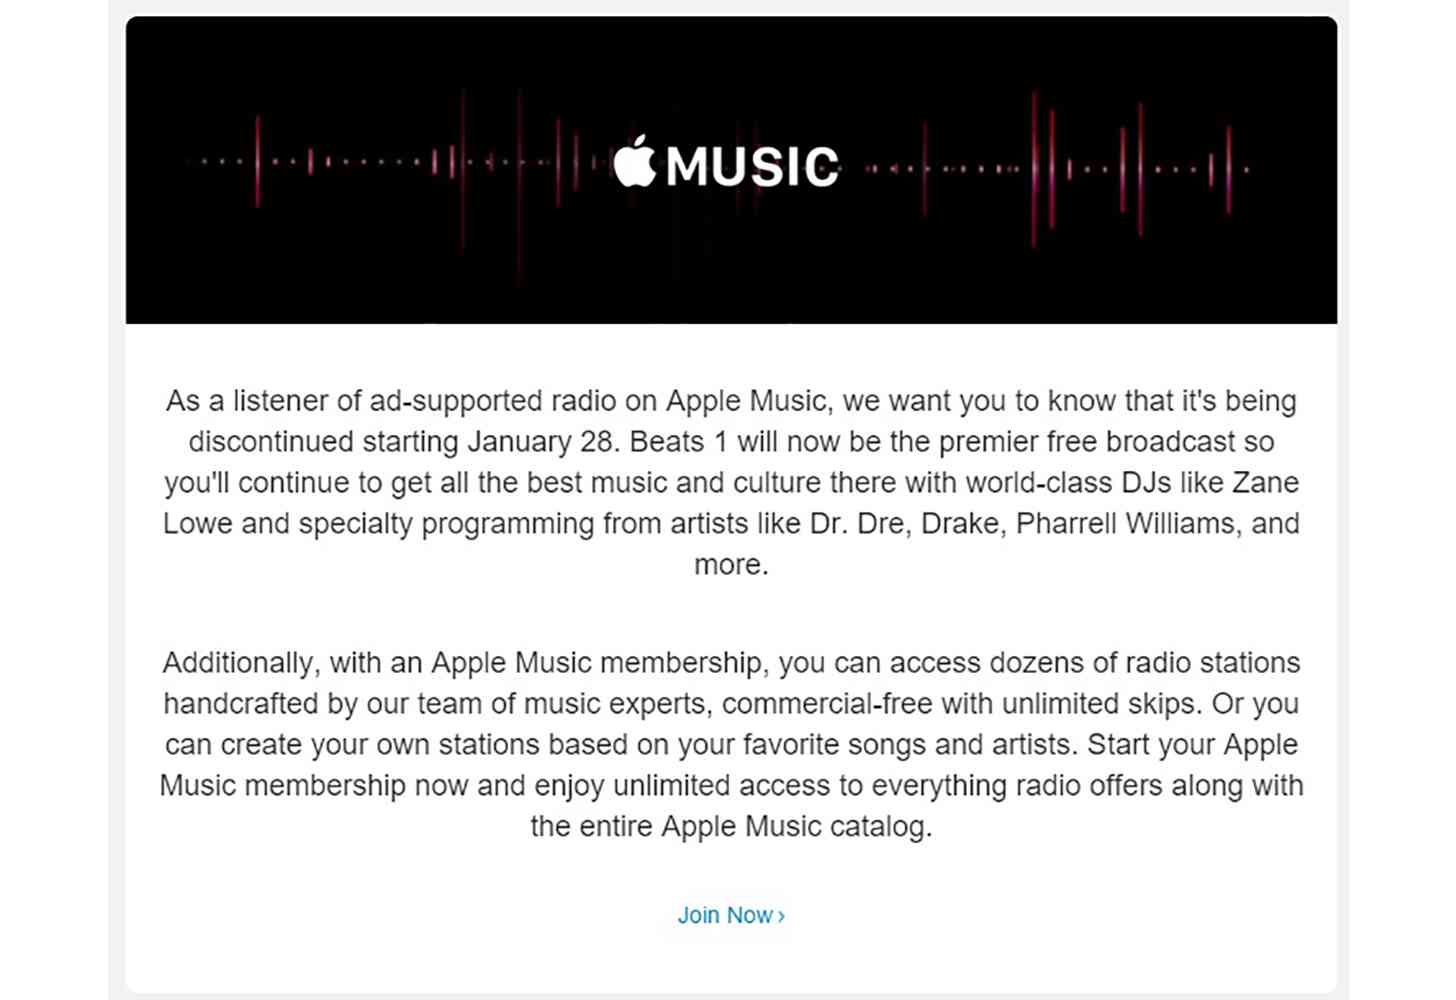 iTunes Radio no longer free on January 28